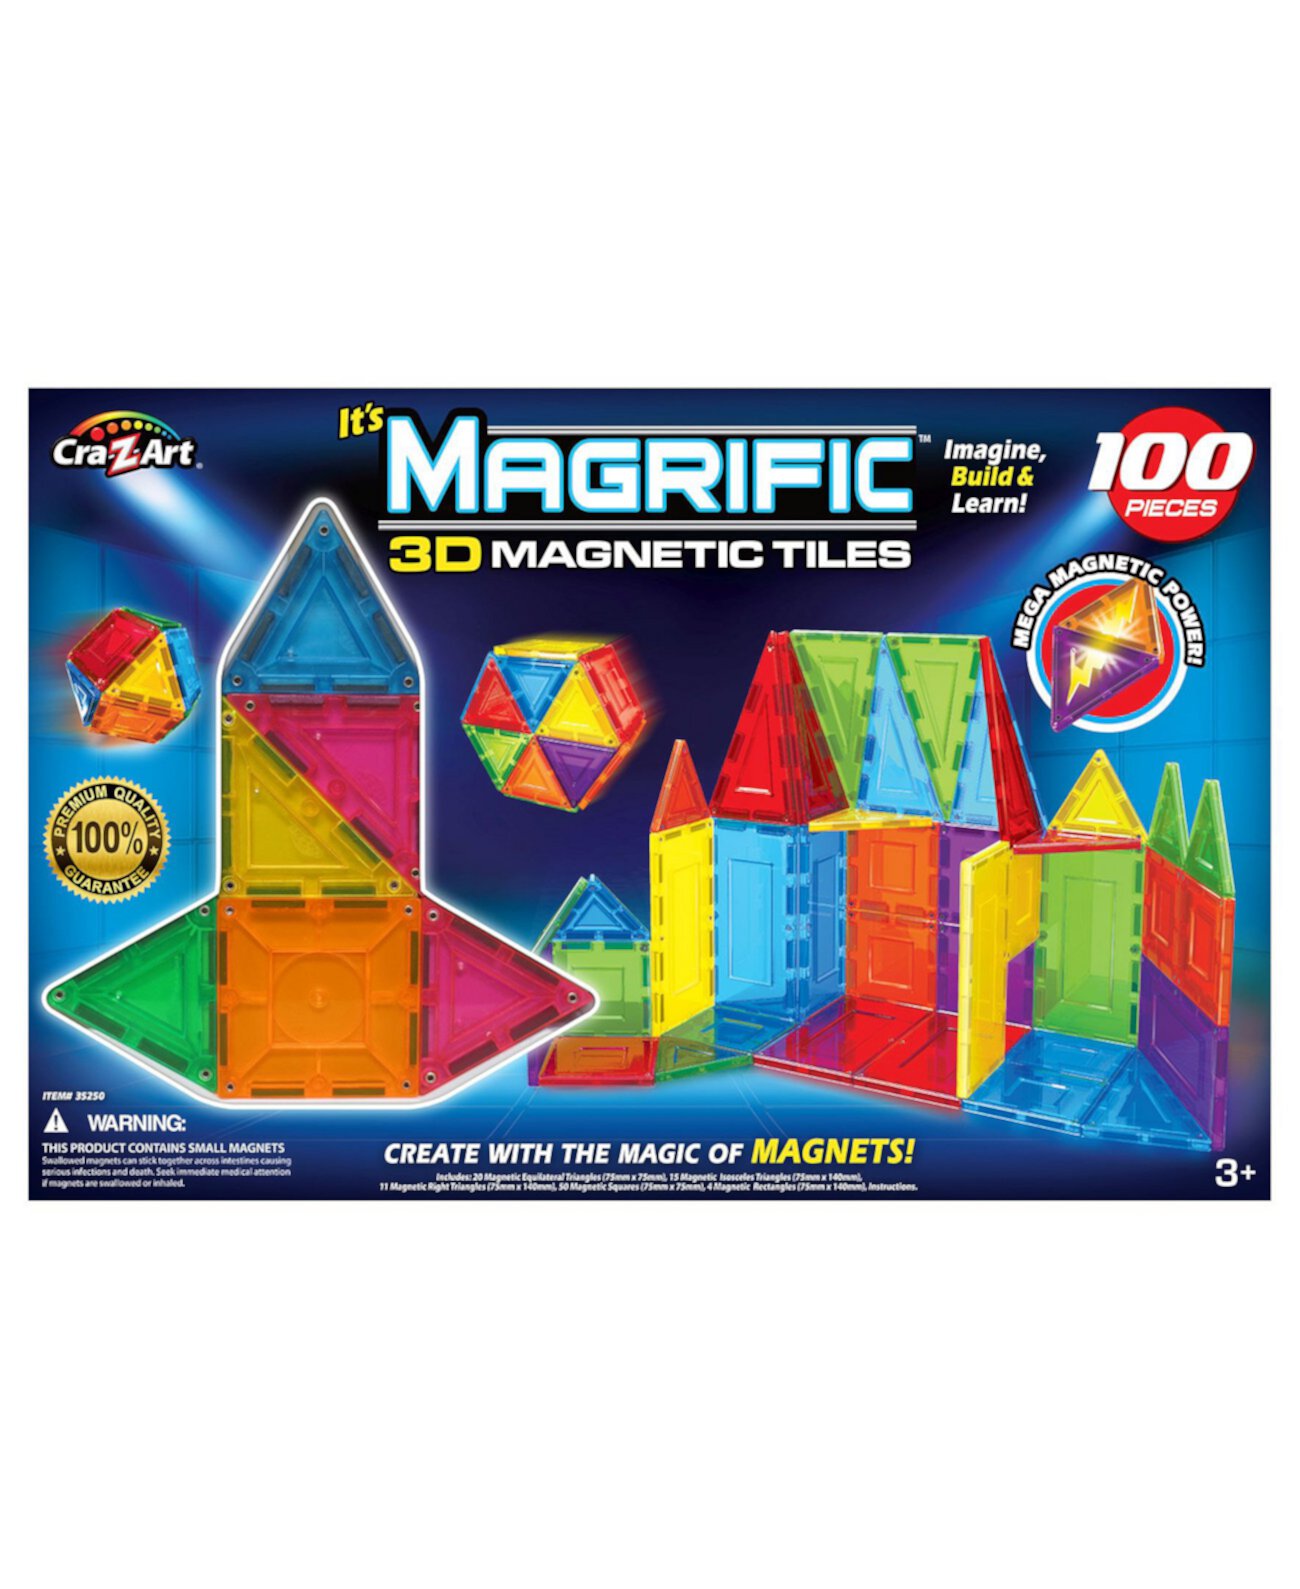 Cra Z Art Magrific 3D Магнитные плитки Магнитные игрушки Набор 100 штук Style Me Up!